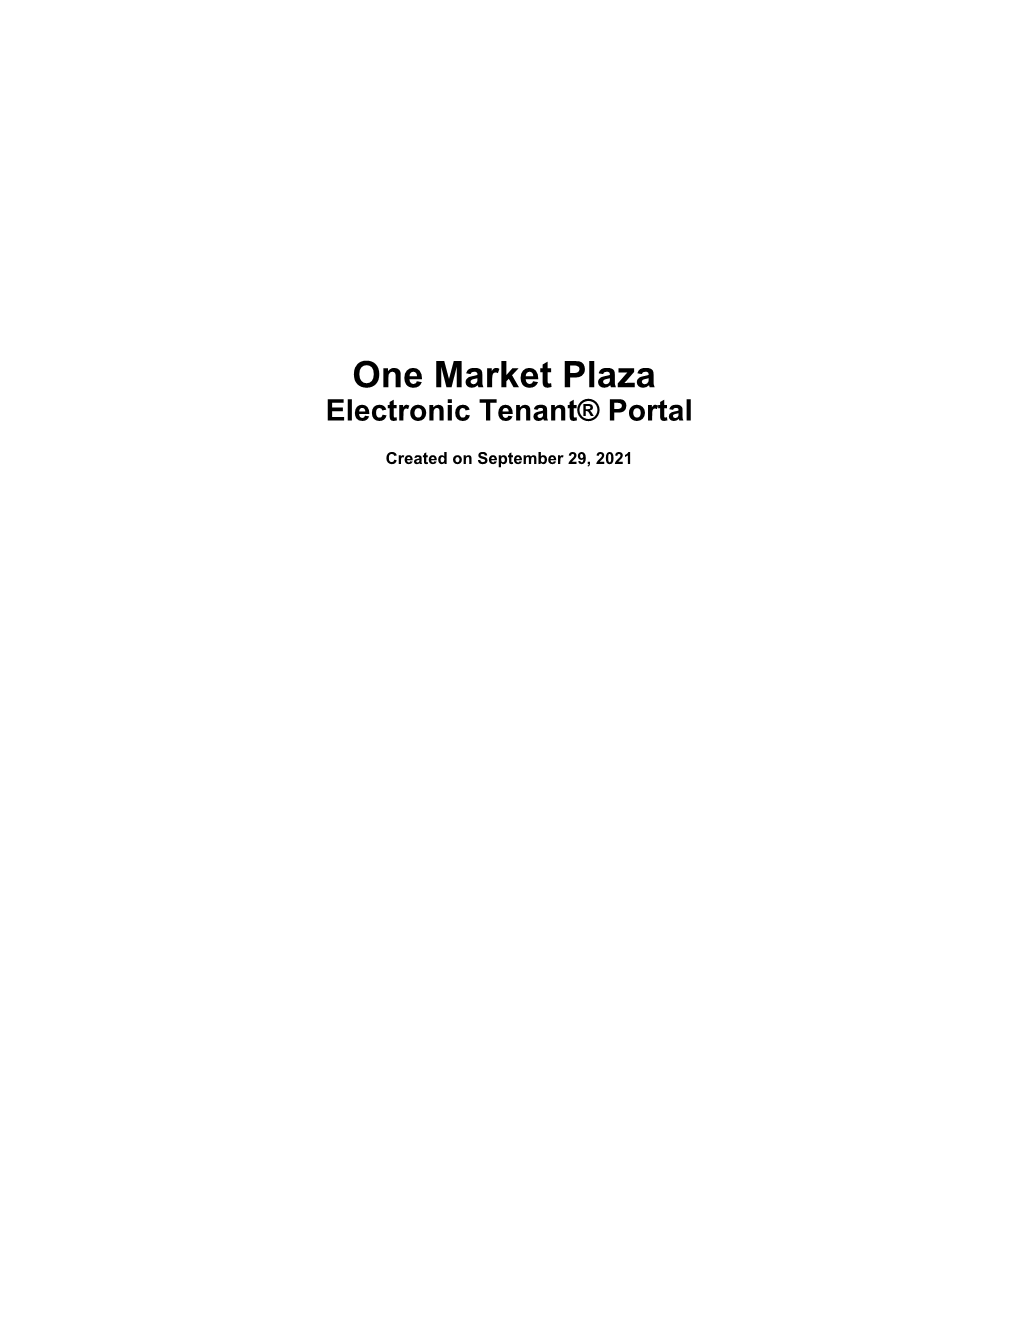 One Market Plaza Electronic Tenant® Portal